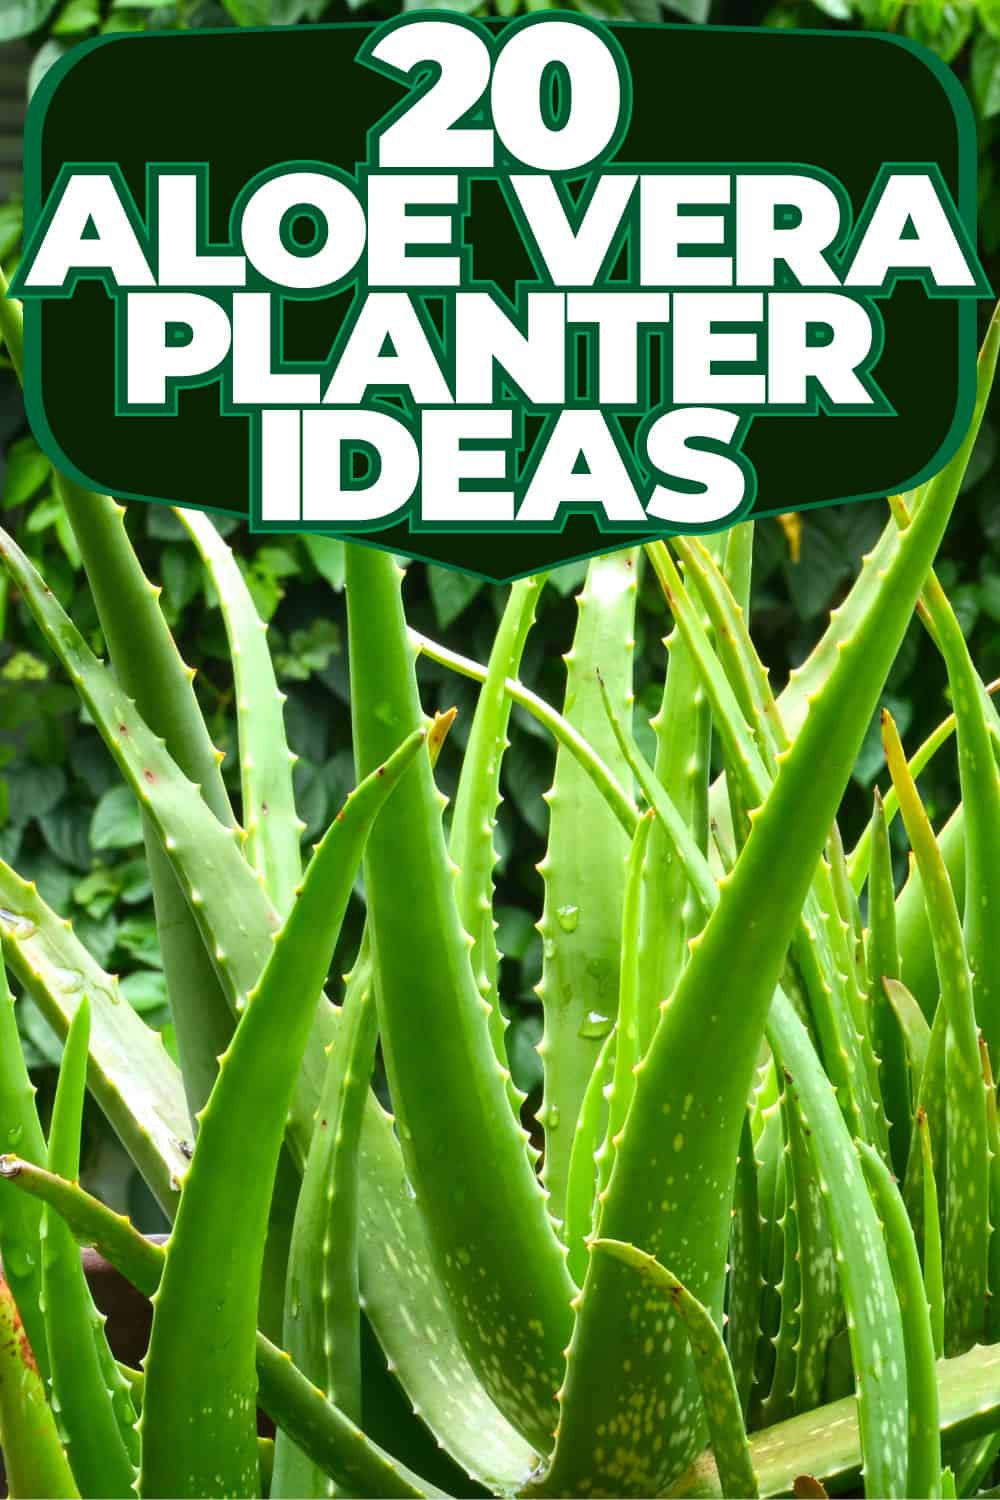 20 Aloe Vera Planter Ideas [With Pictures]